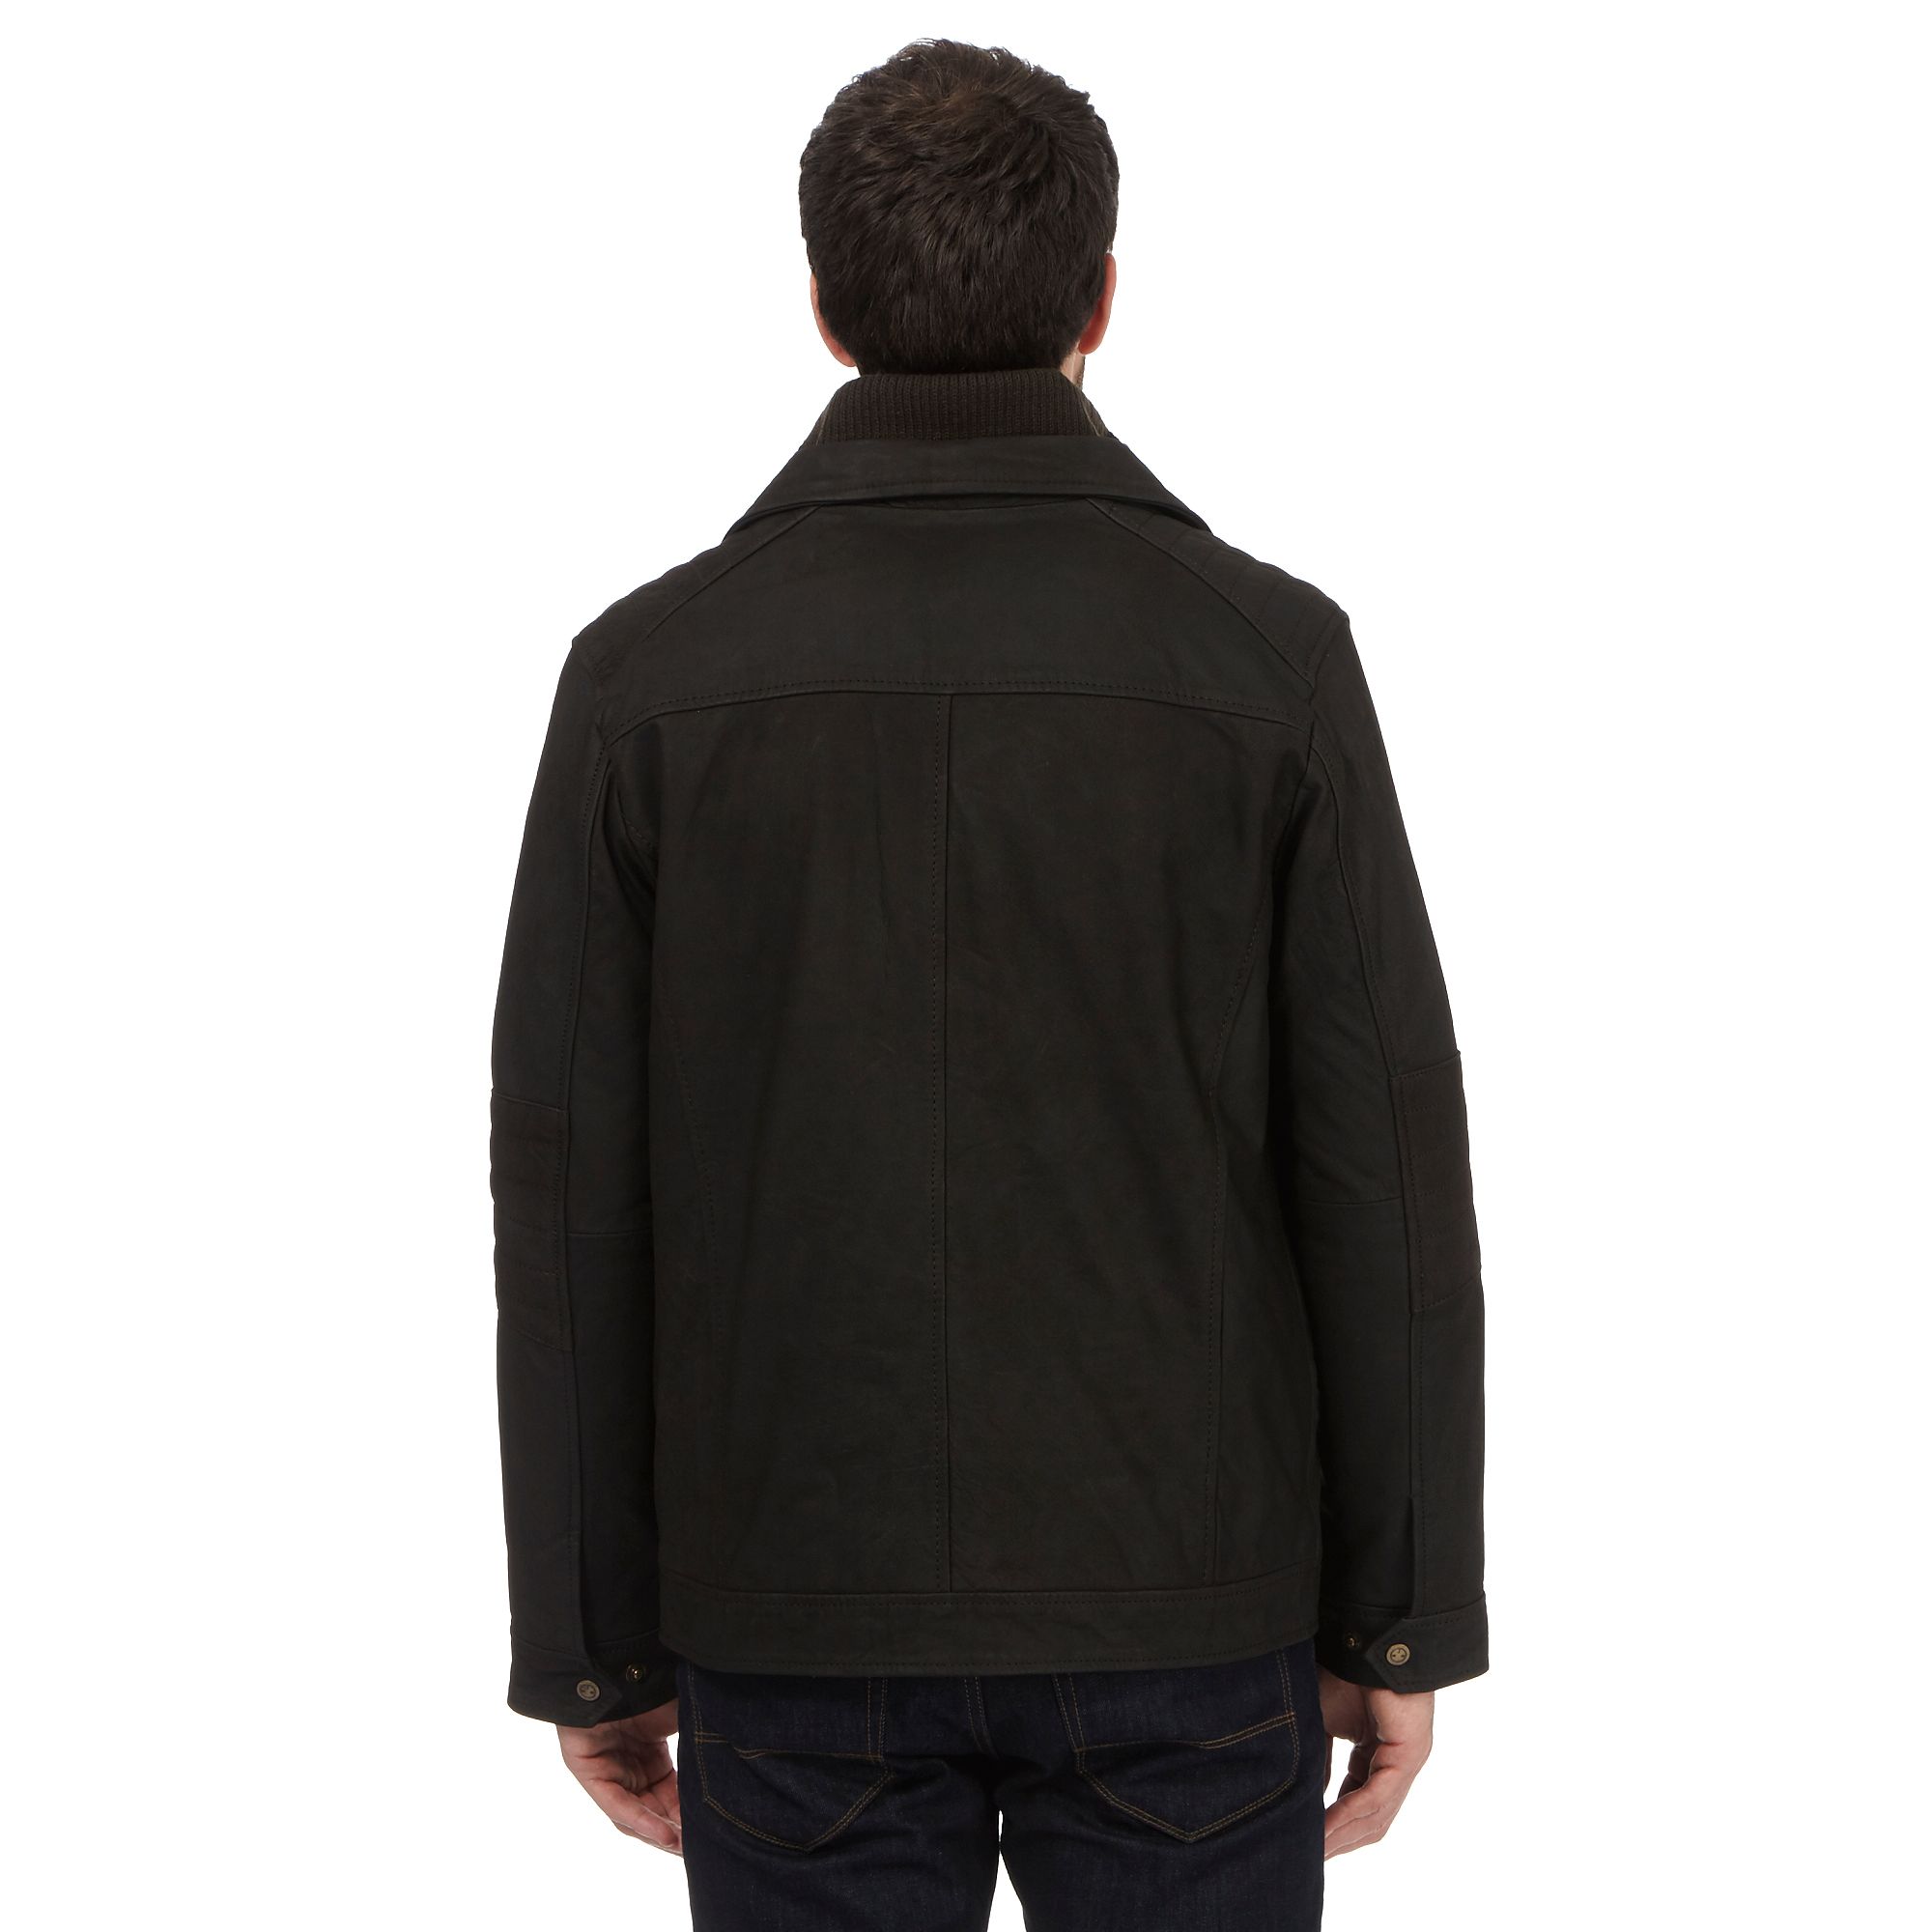 Rjr.John Rocha Mens Dark Brown Leather Jacket From Debenhams | eBay